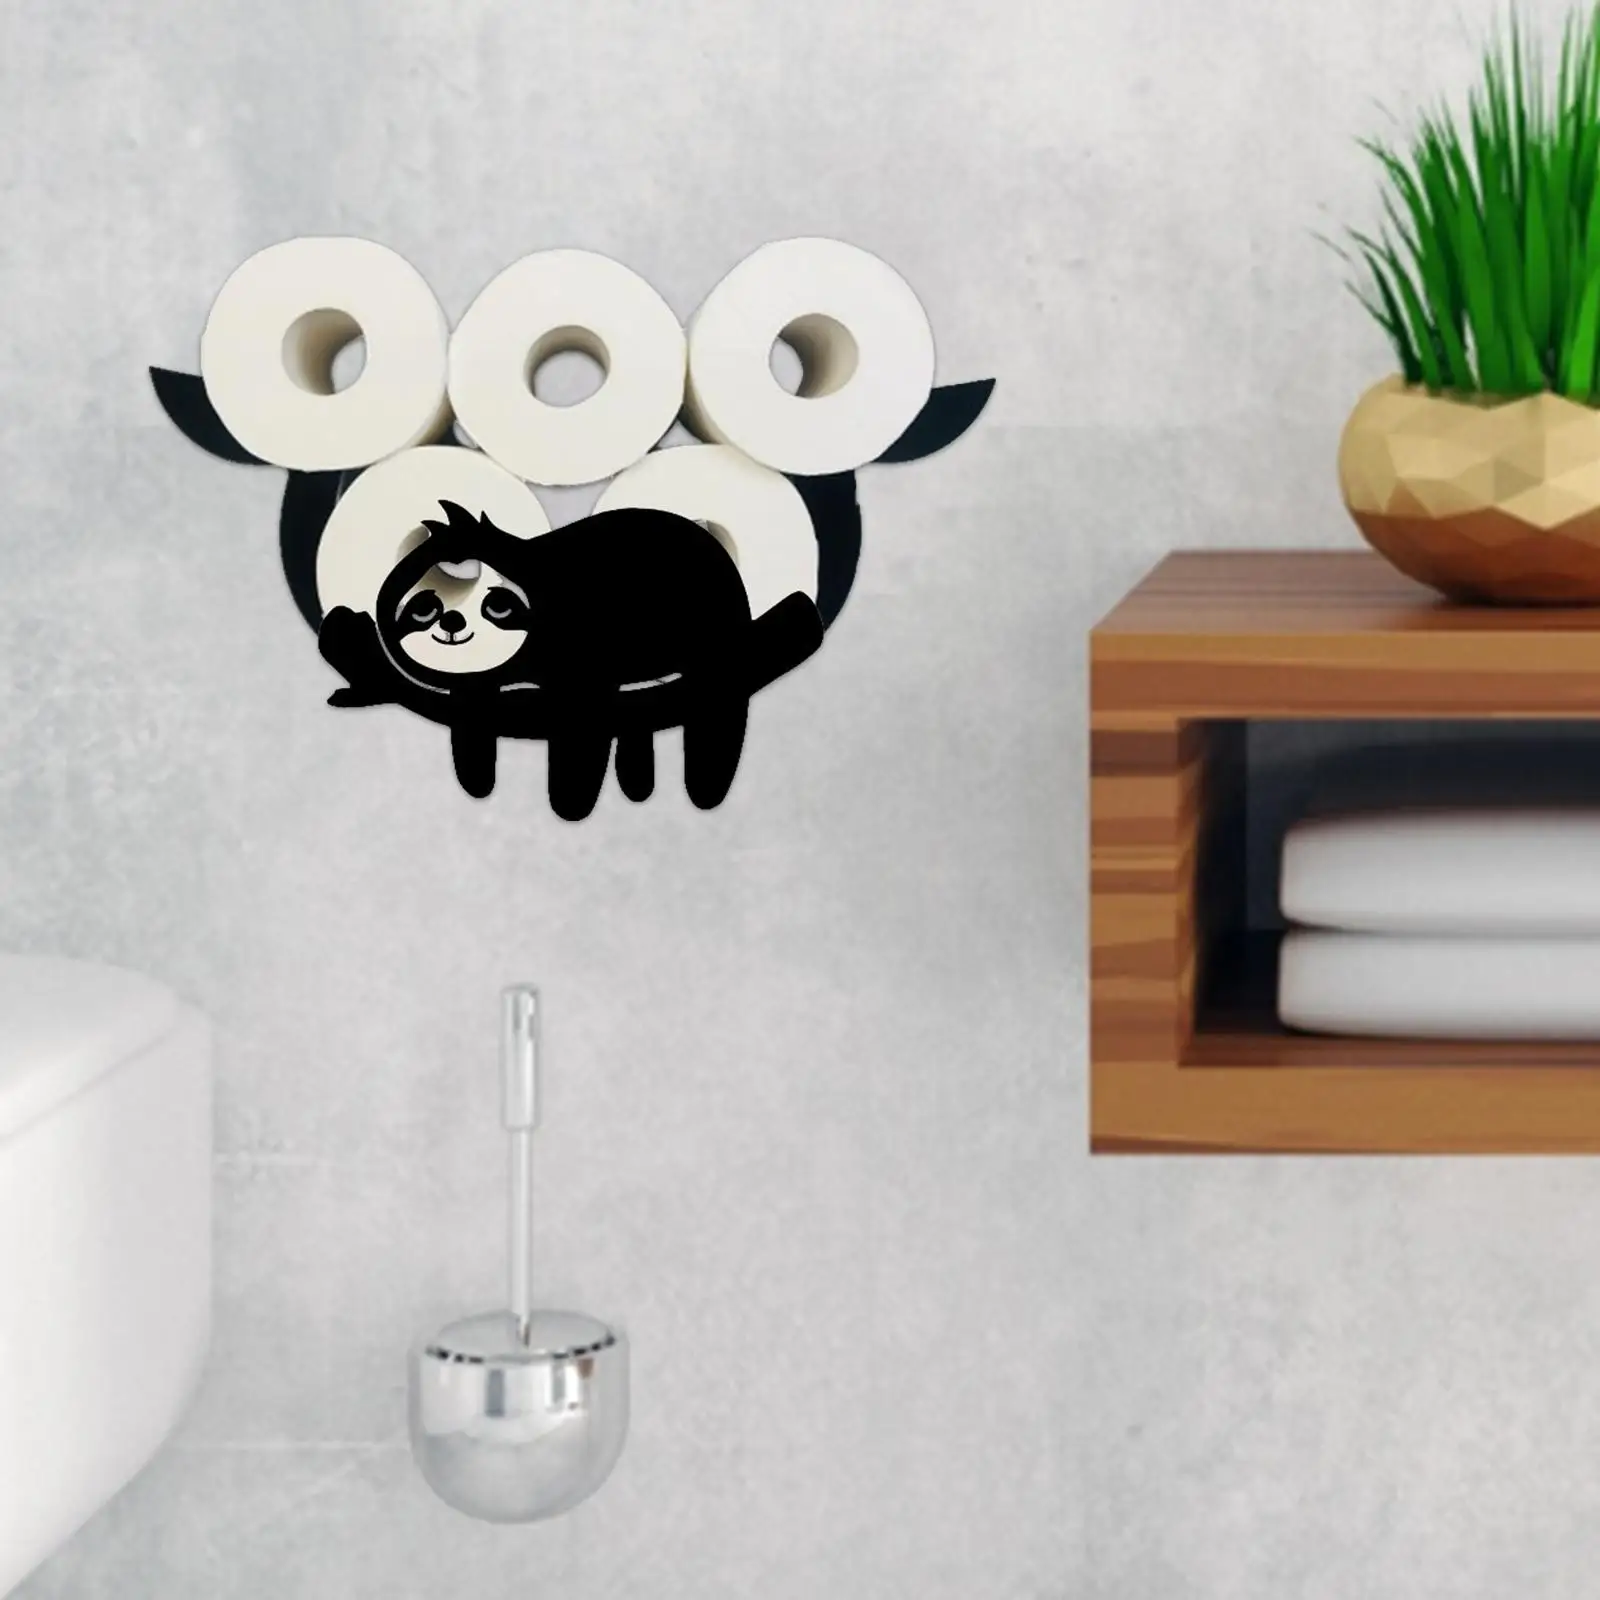 Iron Wall Mount Metal Tissue Basket Shelf Toilet Paper Holder for Office Kitchen Bathroom 5 Rolls